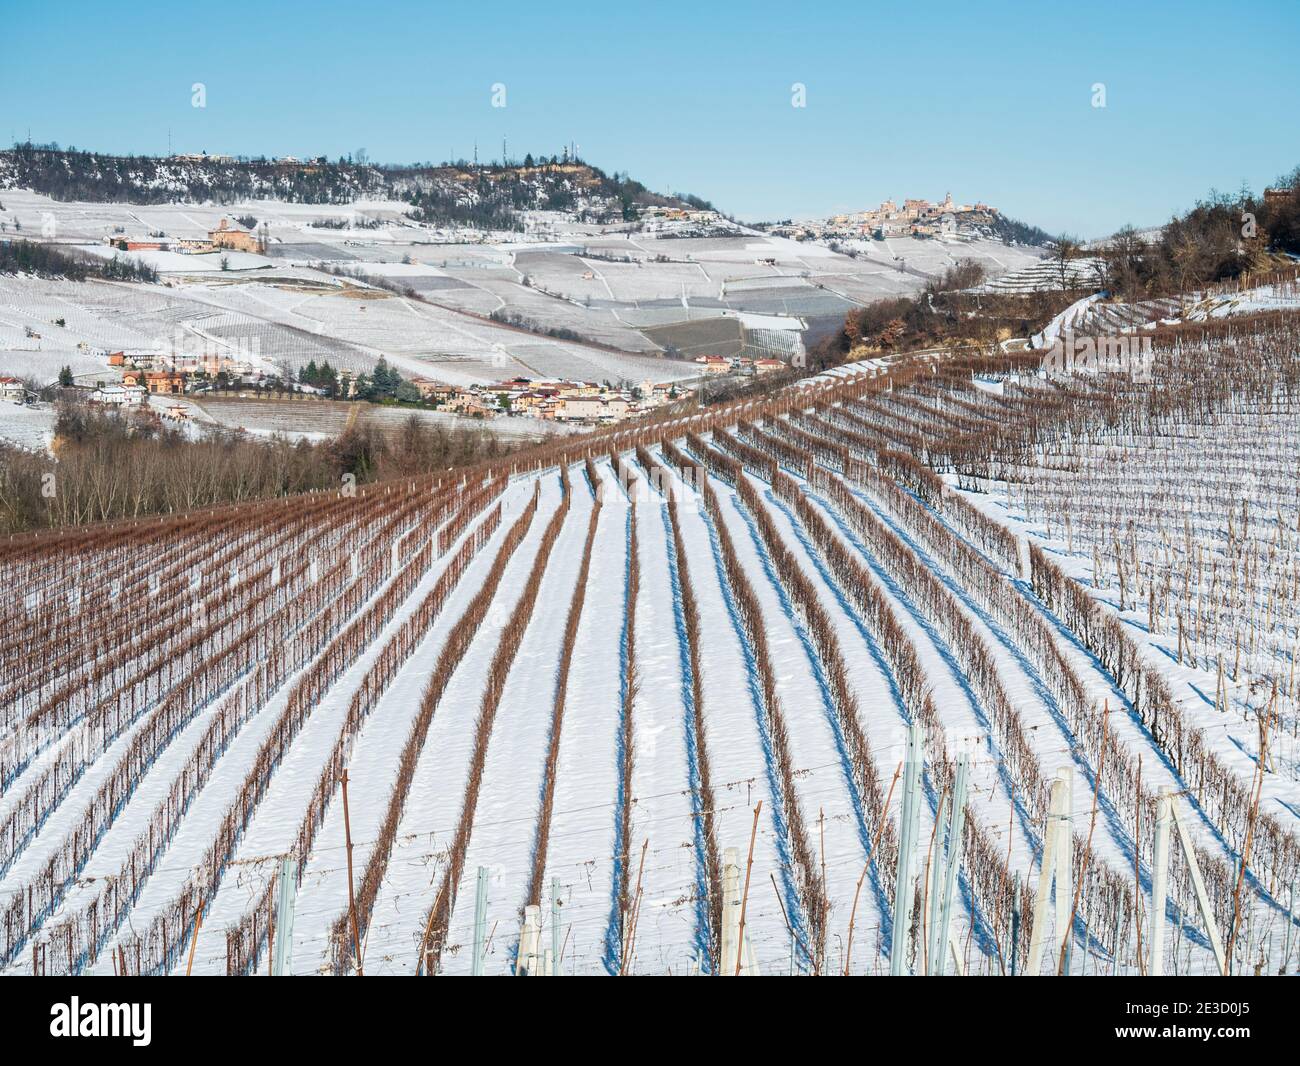 Italy Piedmont: Barolo wine yards unique landscape winter snow, La Morra medieval village castle on hill top, italian historical heritage grape agricu Stock Photo